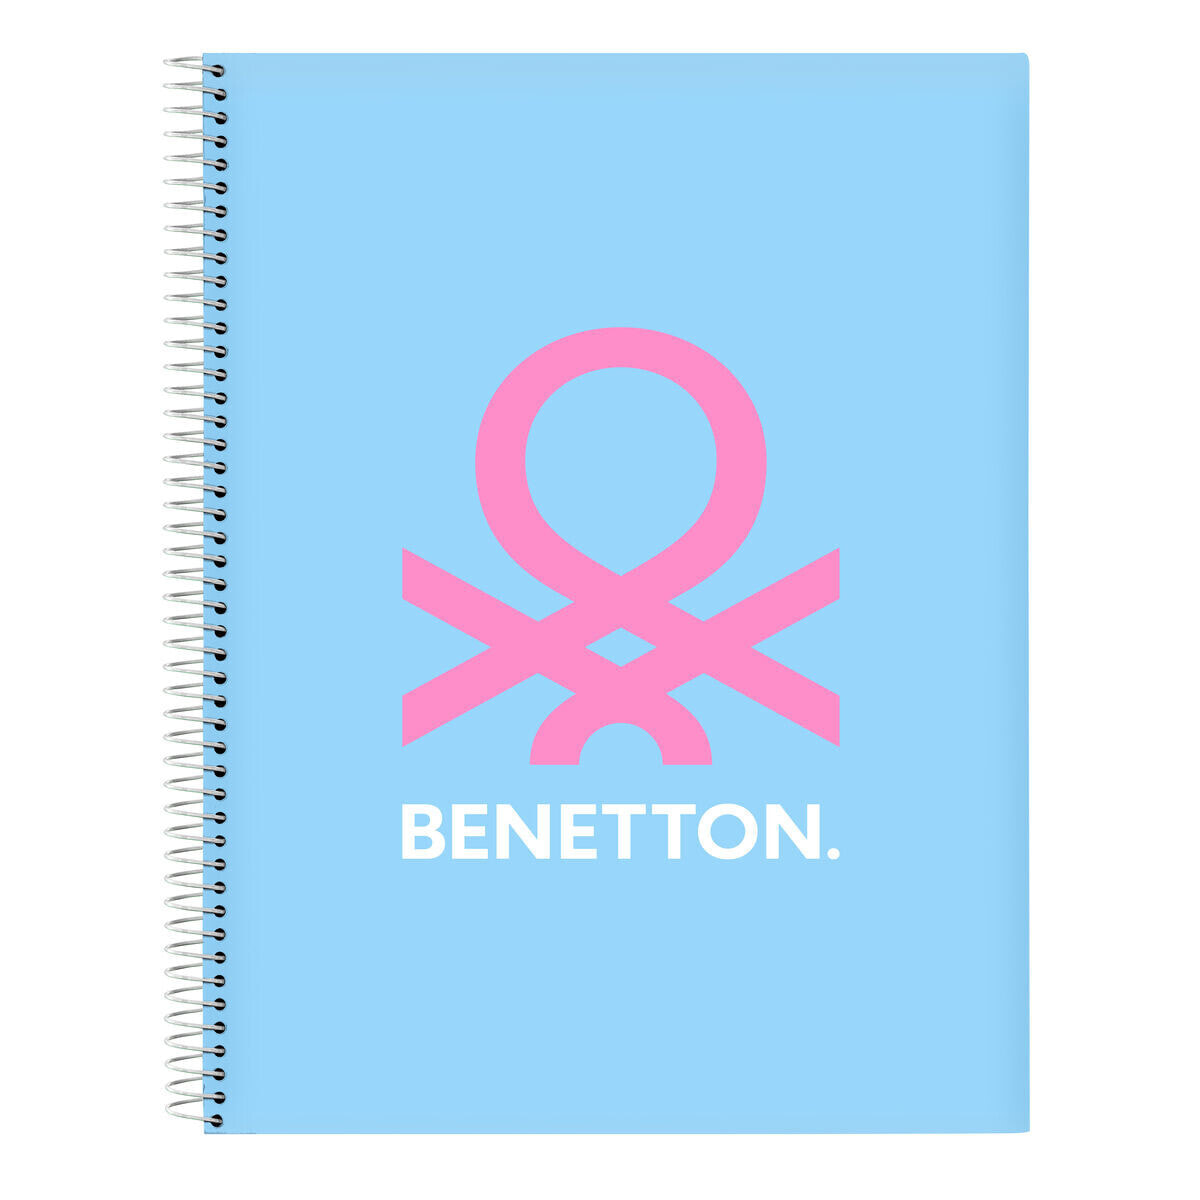 Notebook Benetton Spring Sky blue A4 120 Sheets